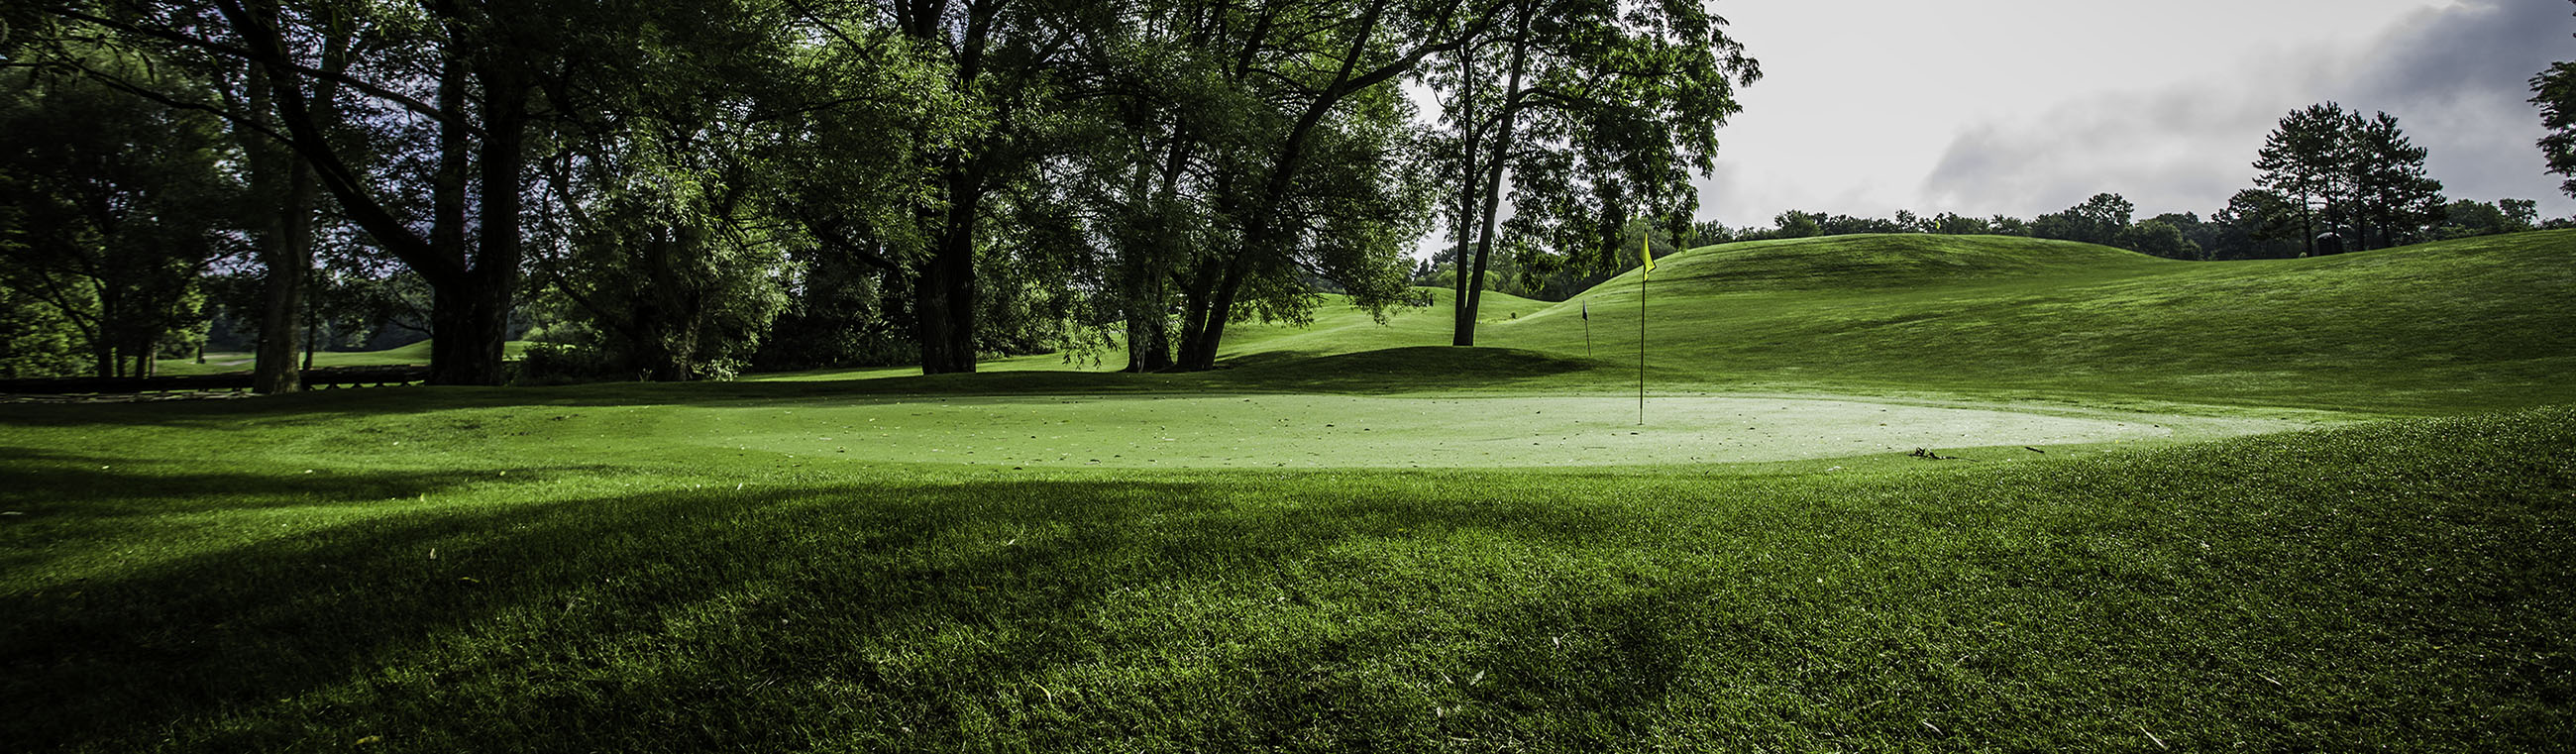 Par Three Golf Course and Footgolf Near Detroit Michigan | The Myth Par Three Golf Course